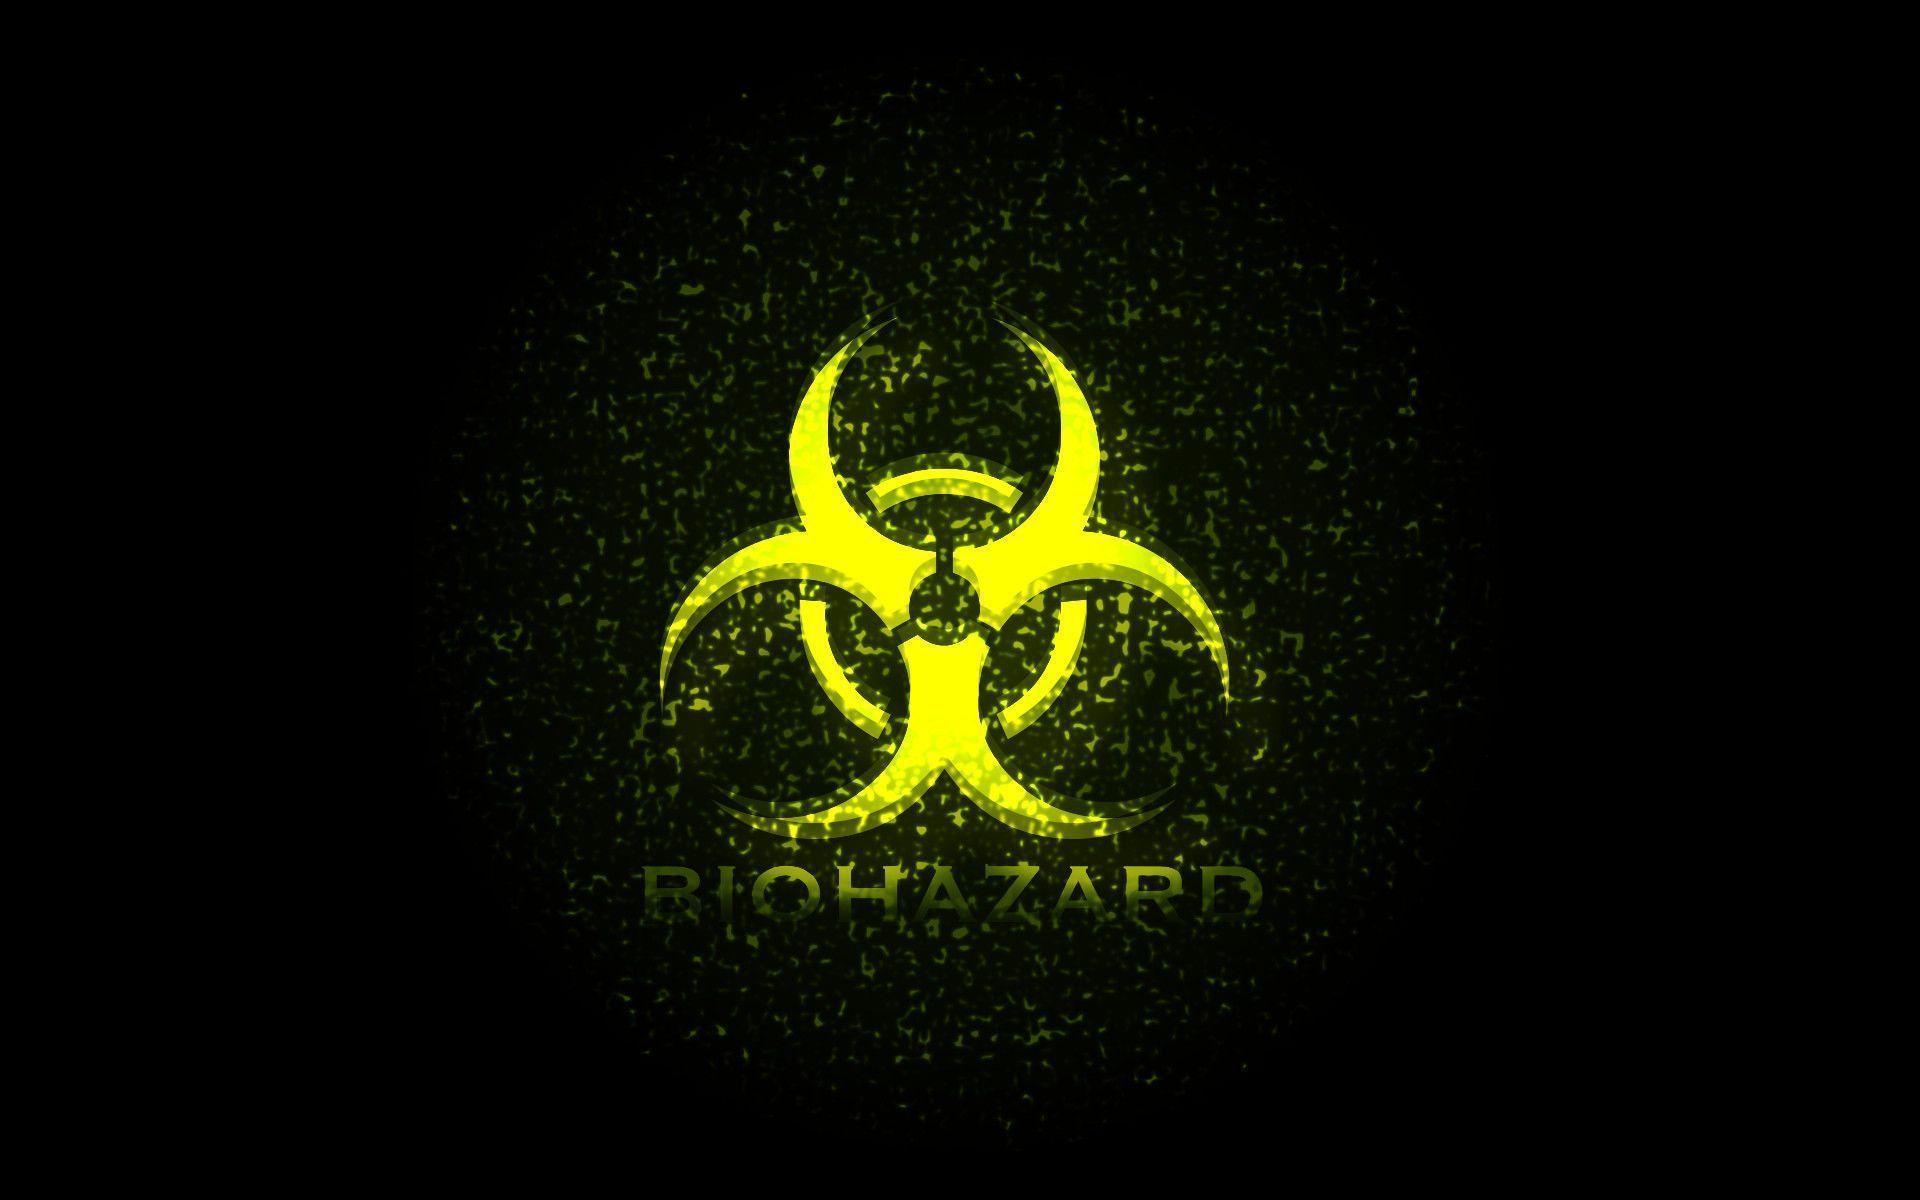 Biohazard Logo Wallpaper Free Biohazard Logo Background